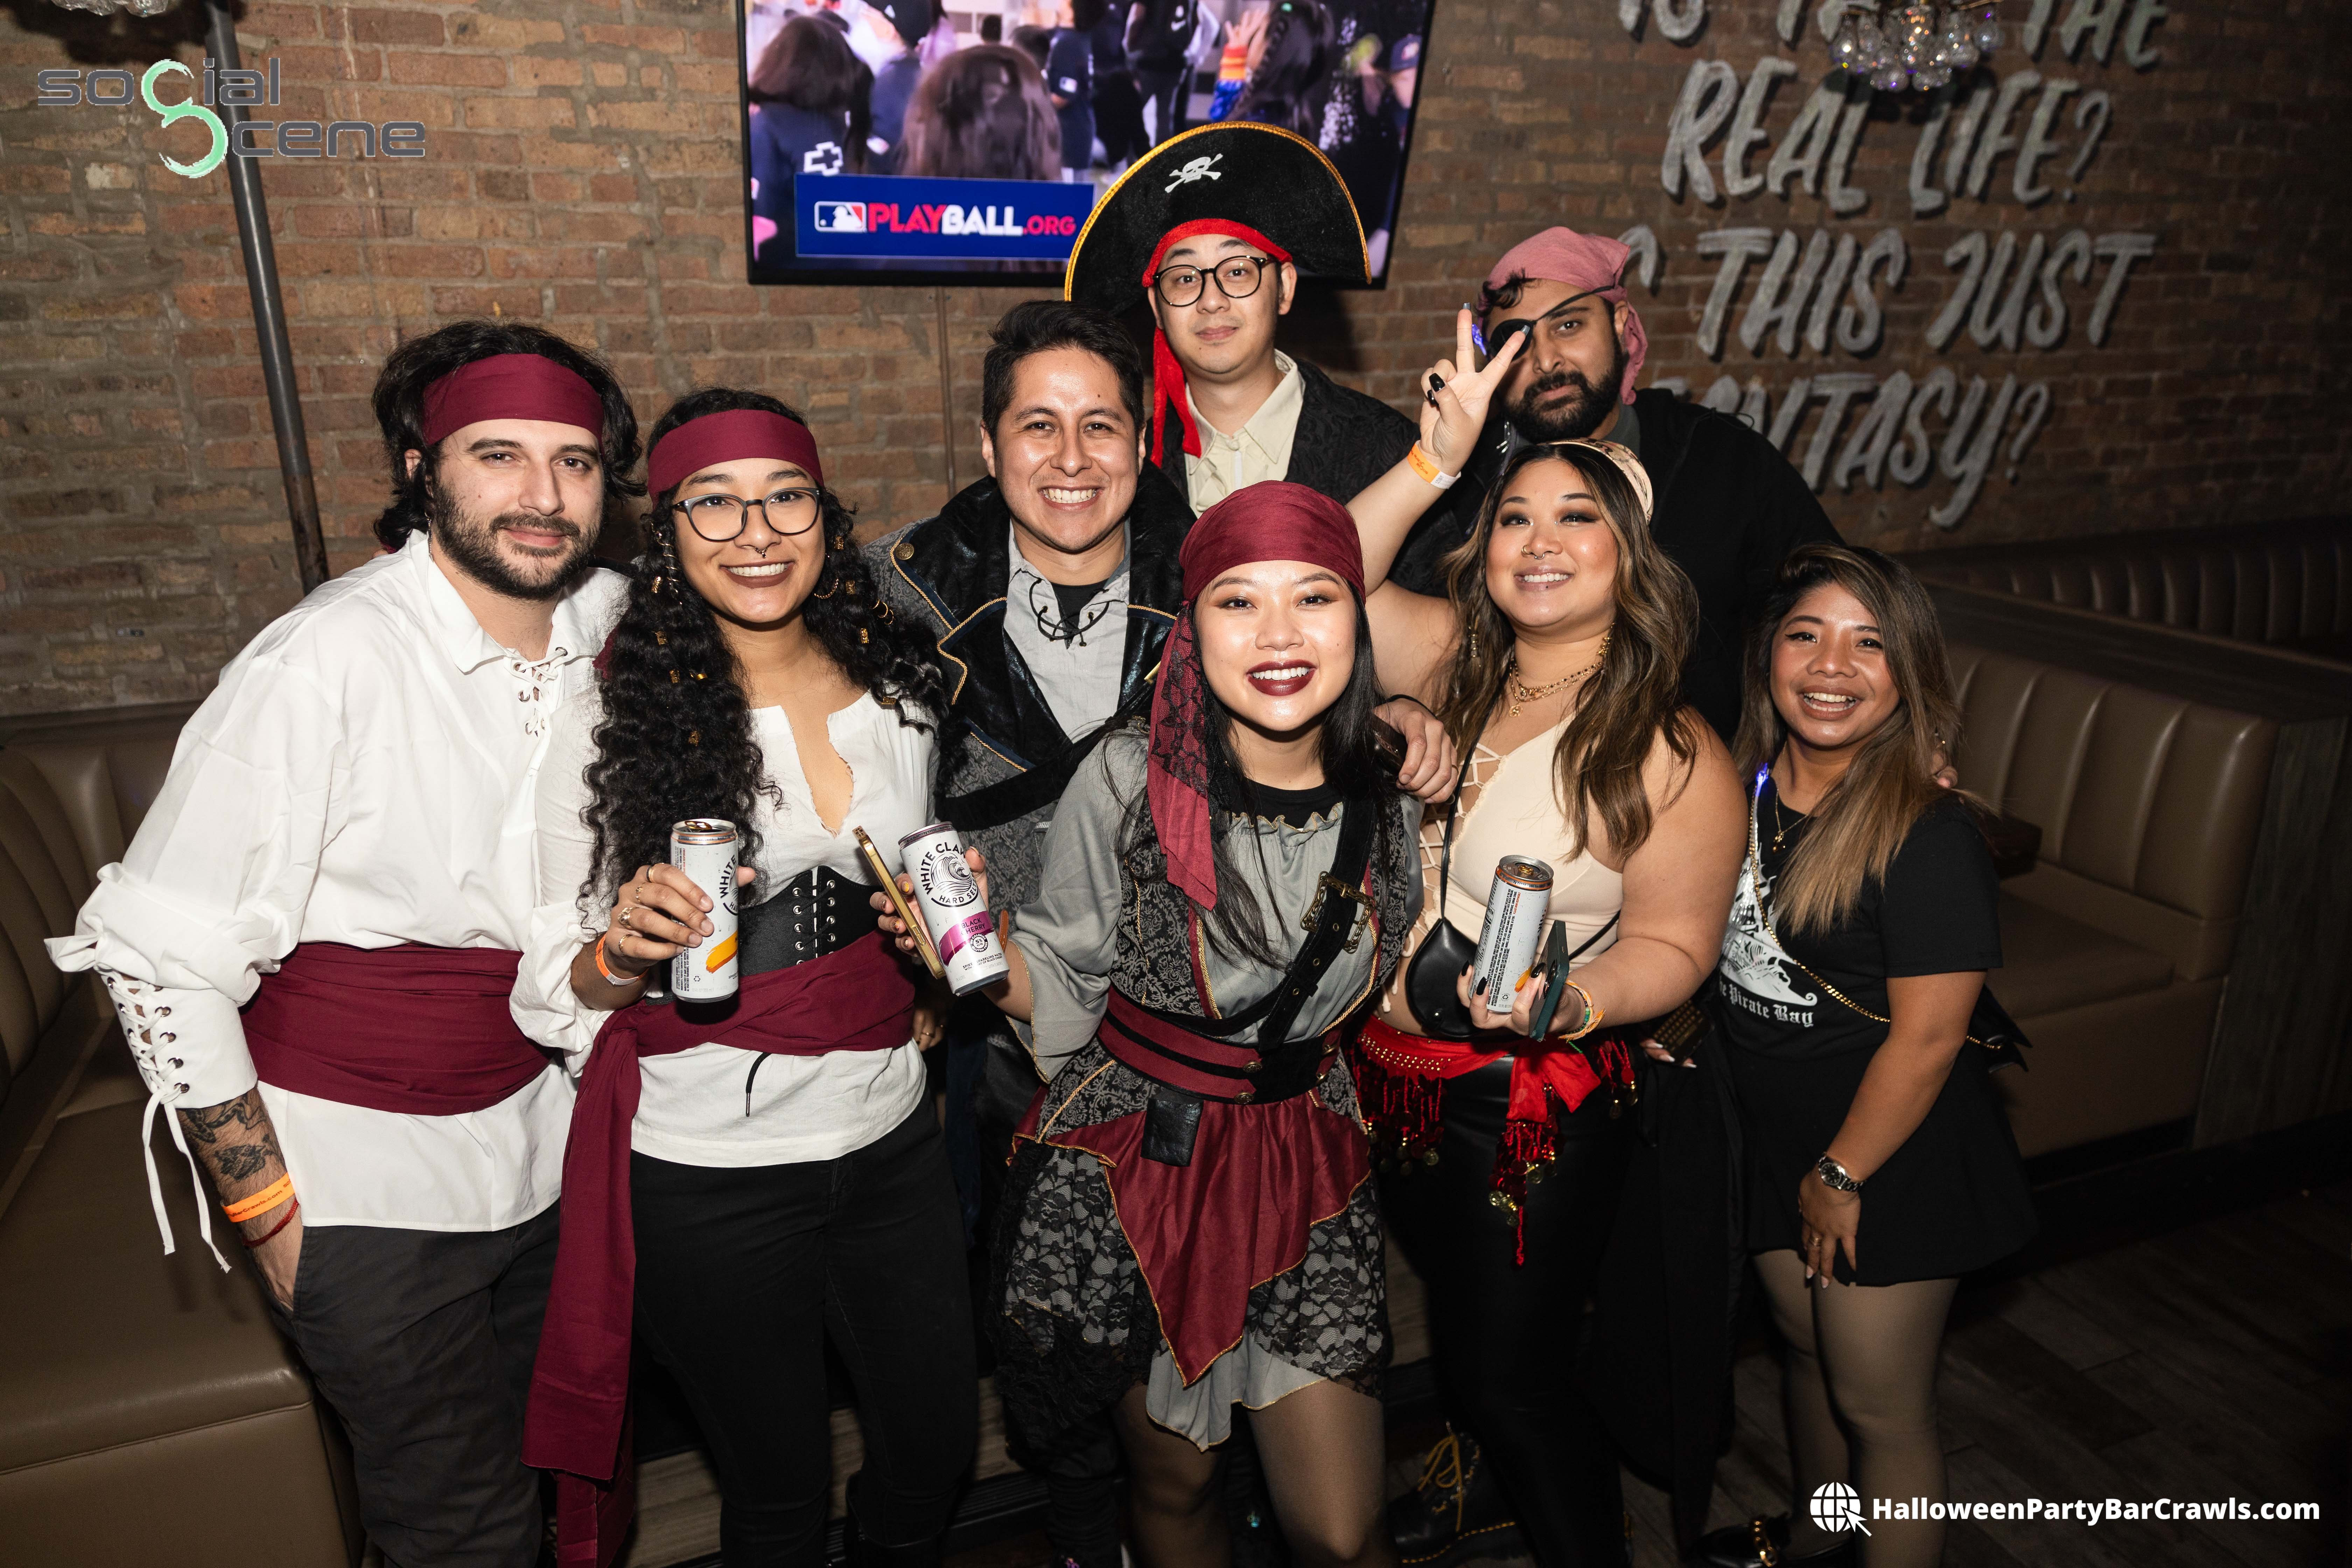 Halloween-Bar-Crawl-halloweenpartybarcrawls-DIY-Costume-ideas-groups-pirates